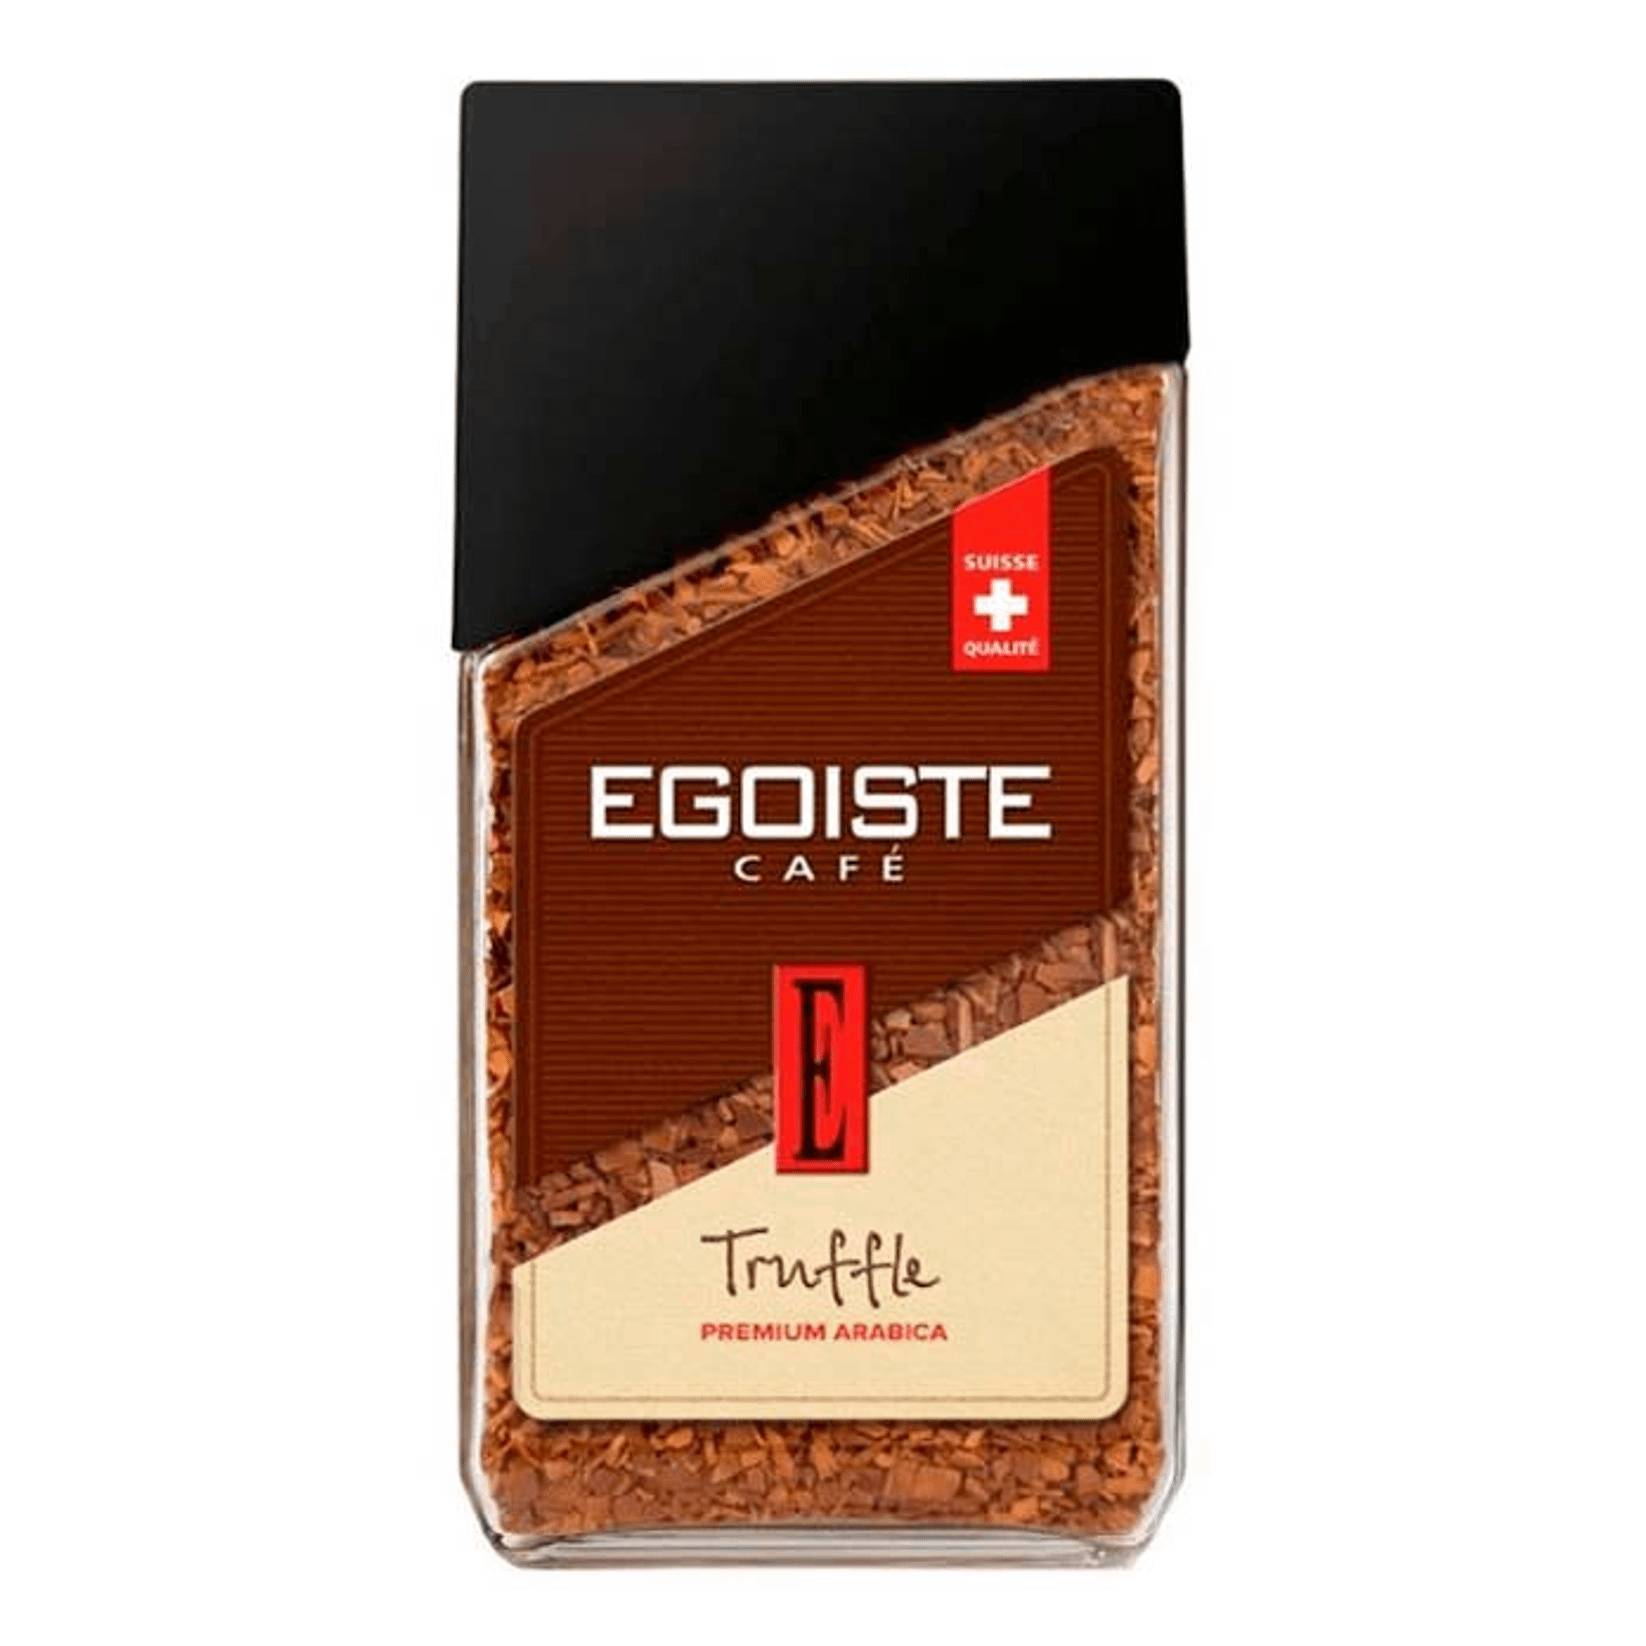 Кофе расворимый Egoiste Truffle, 95 г кофе растворимый 3 в 1 петровская слобода пломбир 18 г 25 пакетиков